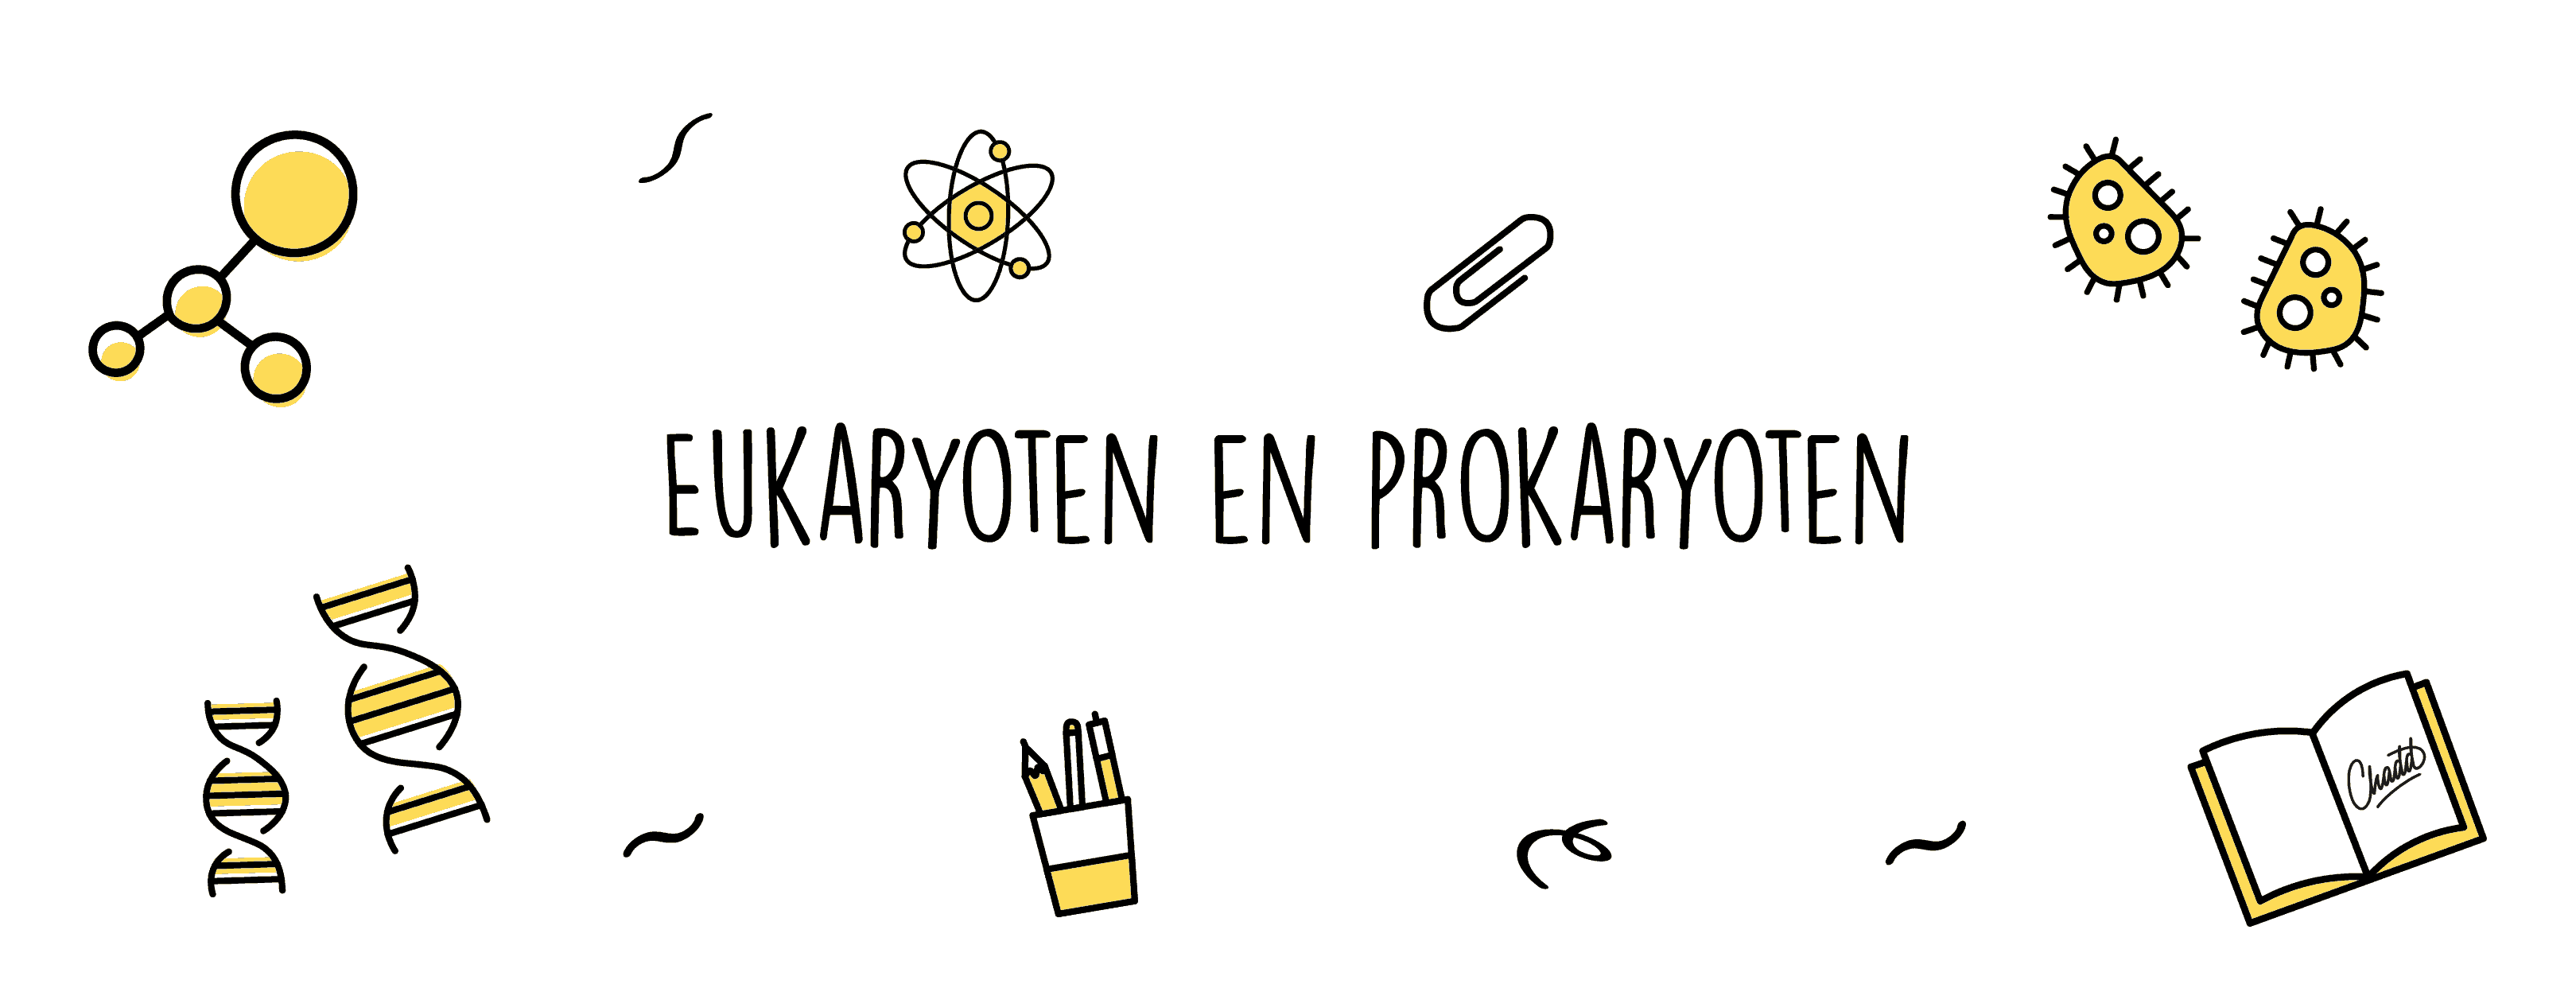 eukaryoten en prokaryoten